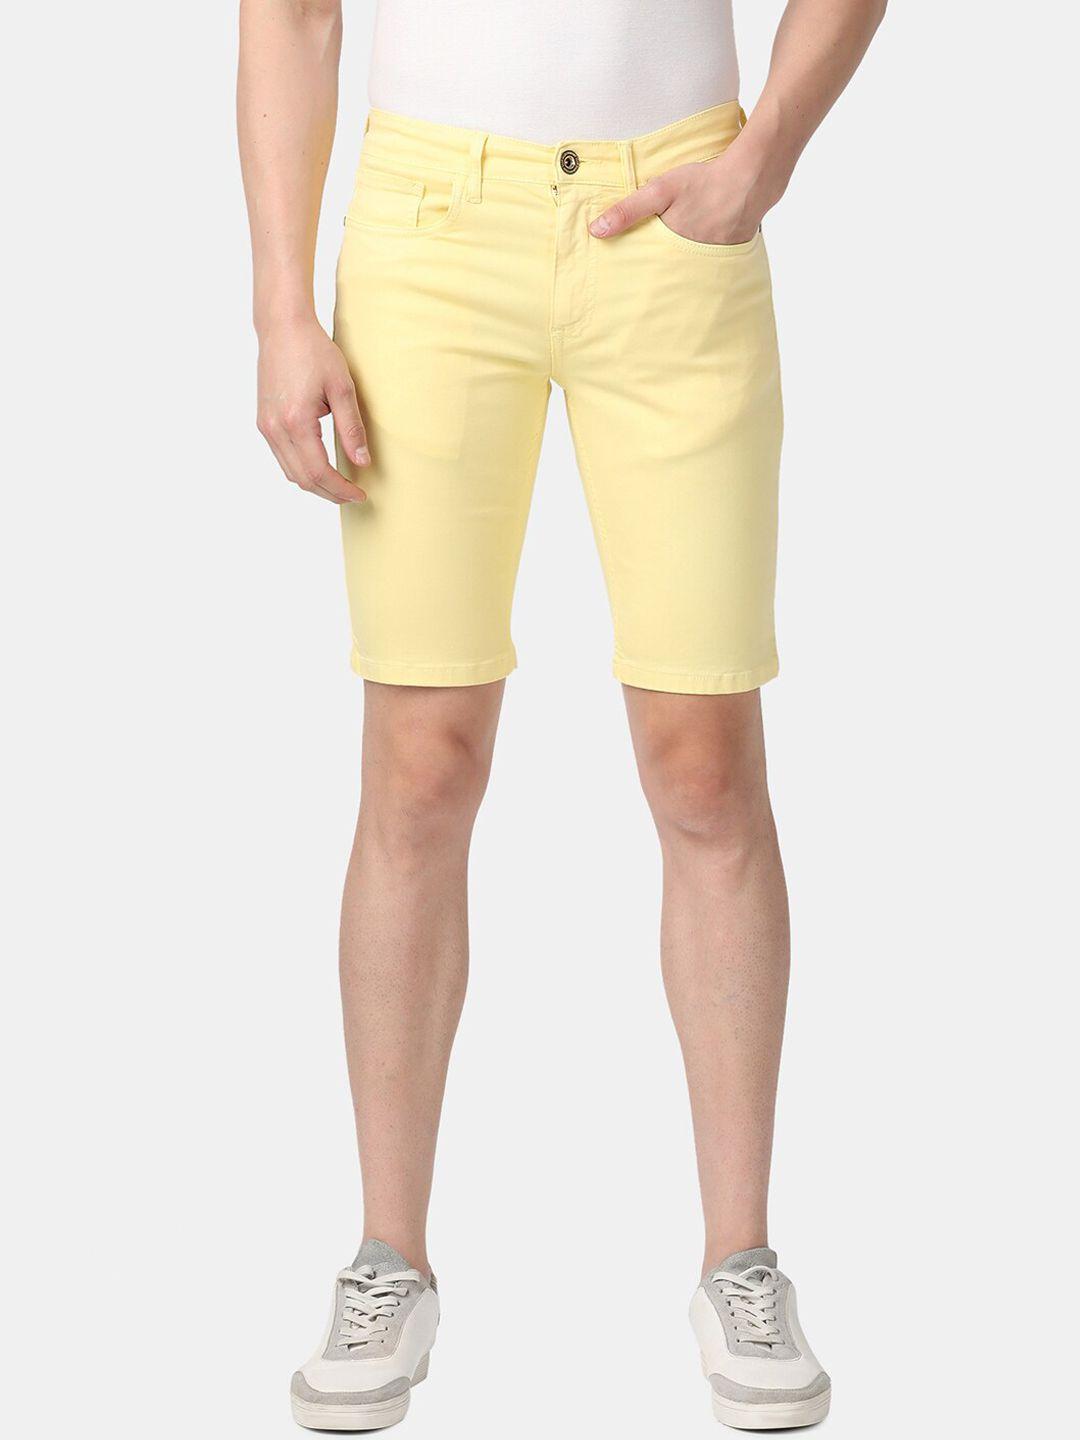 llak-jeans-men-yellow-solid-slim-fit-denim-shorts